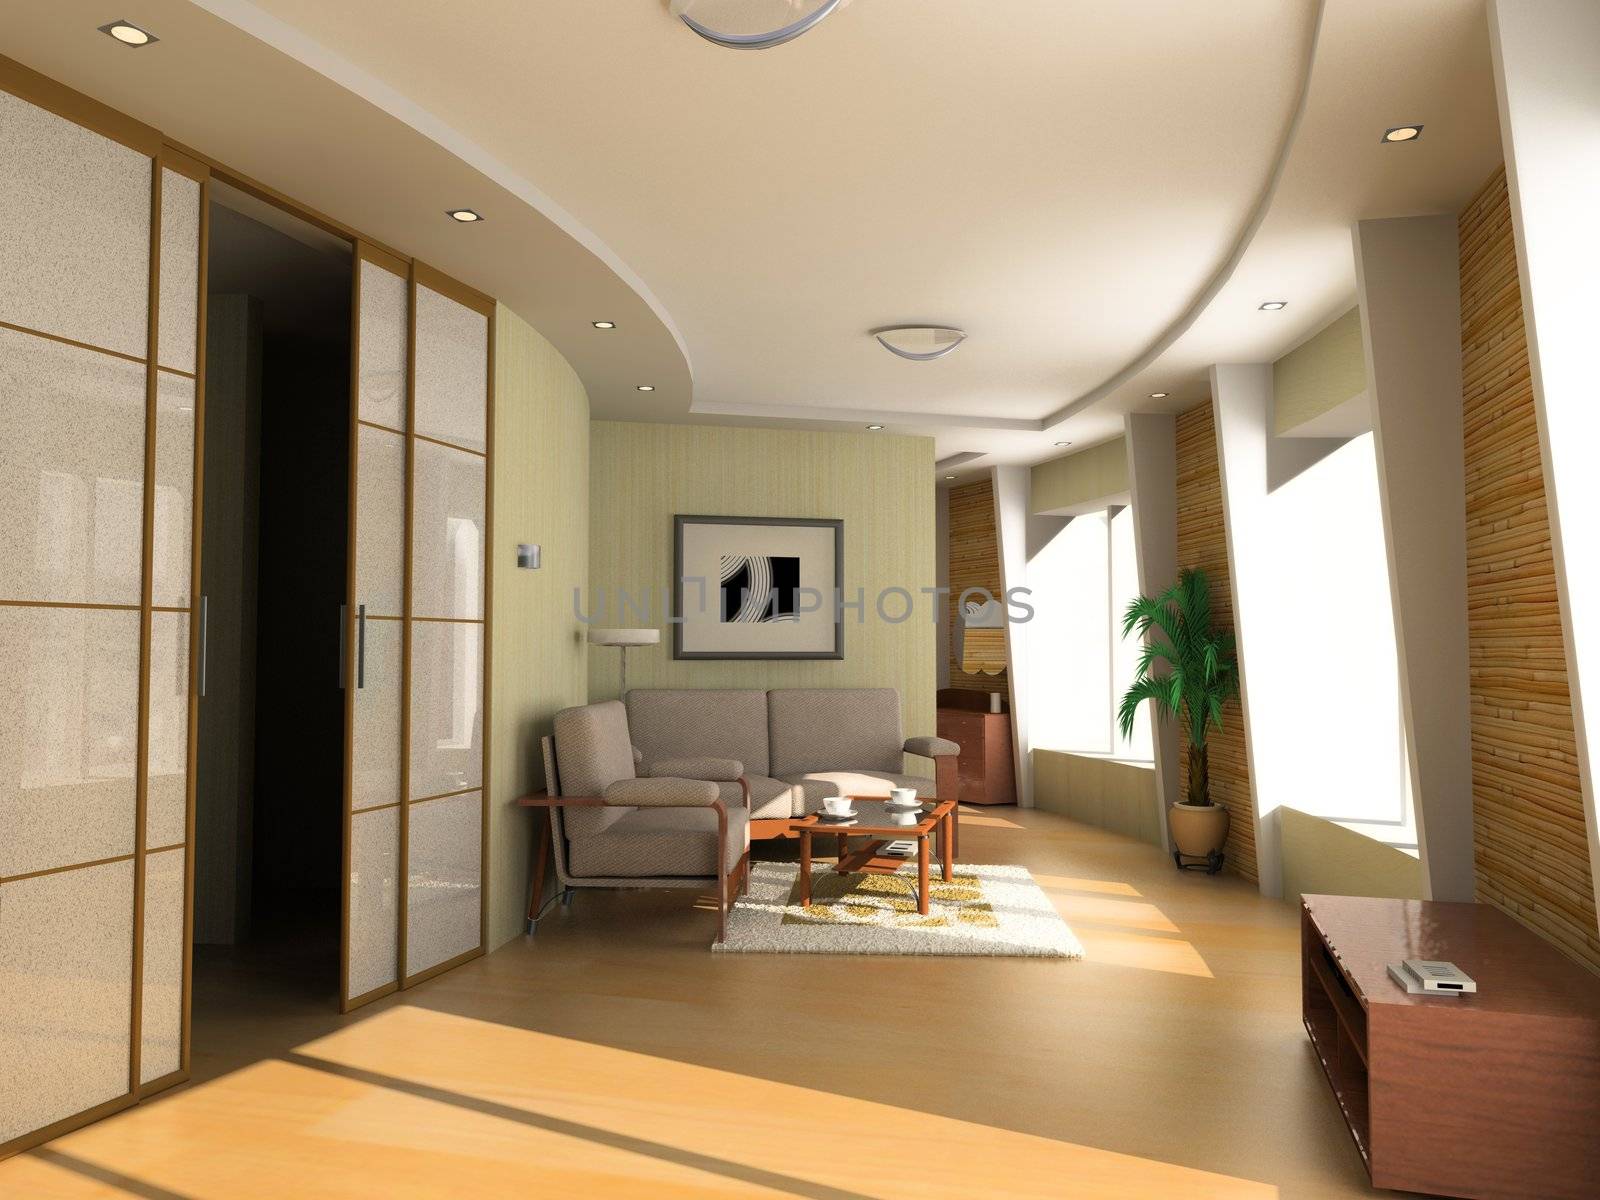 design of the modern hotel interior (3D rendering)